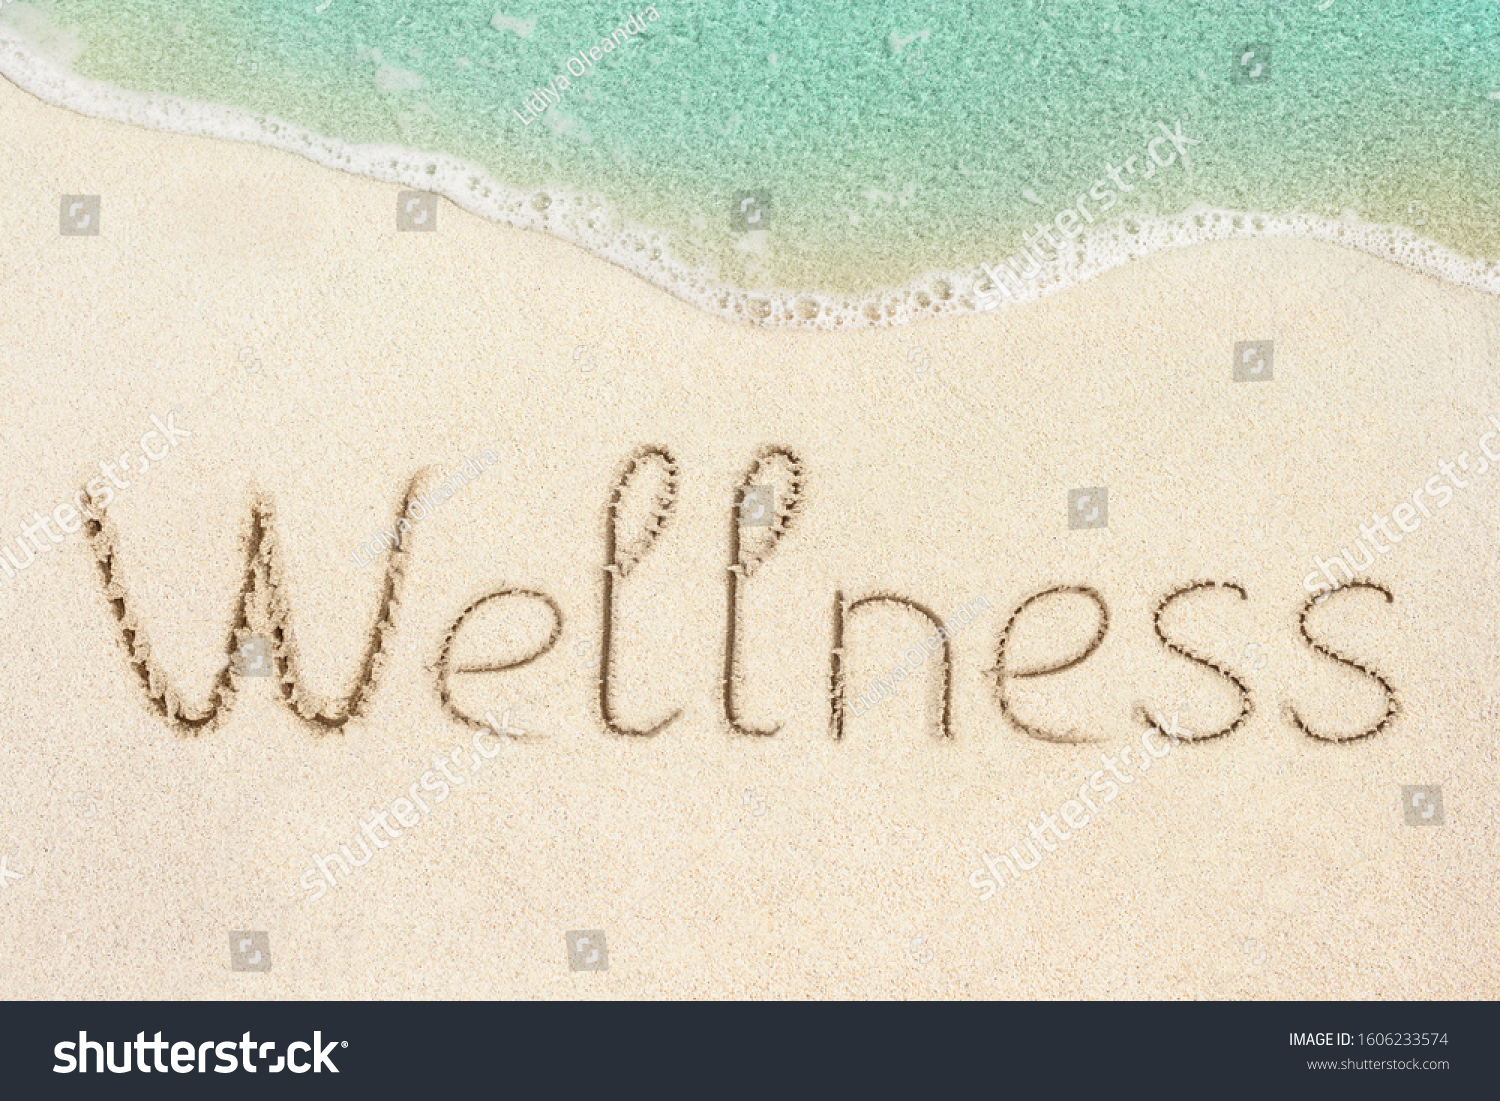 Wellness concept photo. Word Wellness handwritten on the sand. Beach and soft wave background. #1606233574